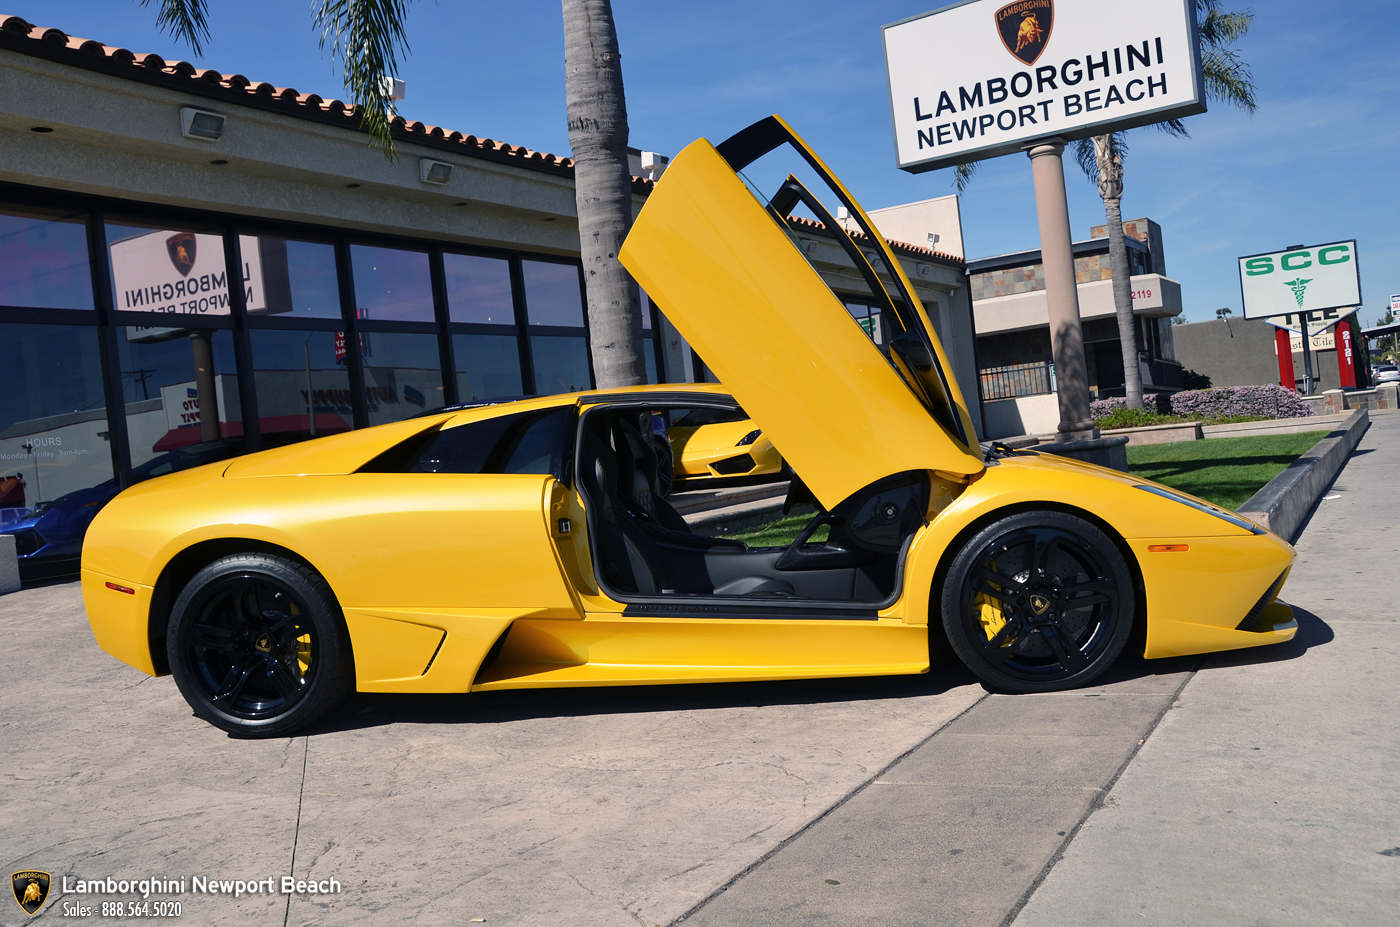 Lamborghini Newport Beach Blog: Giallo LP640 ready to go!